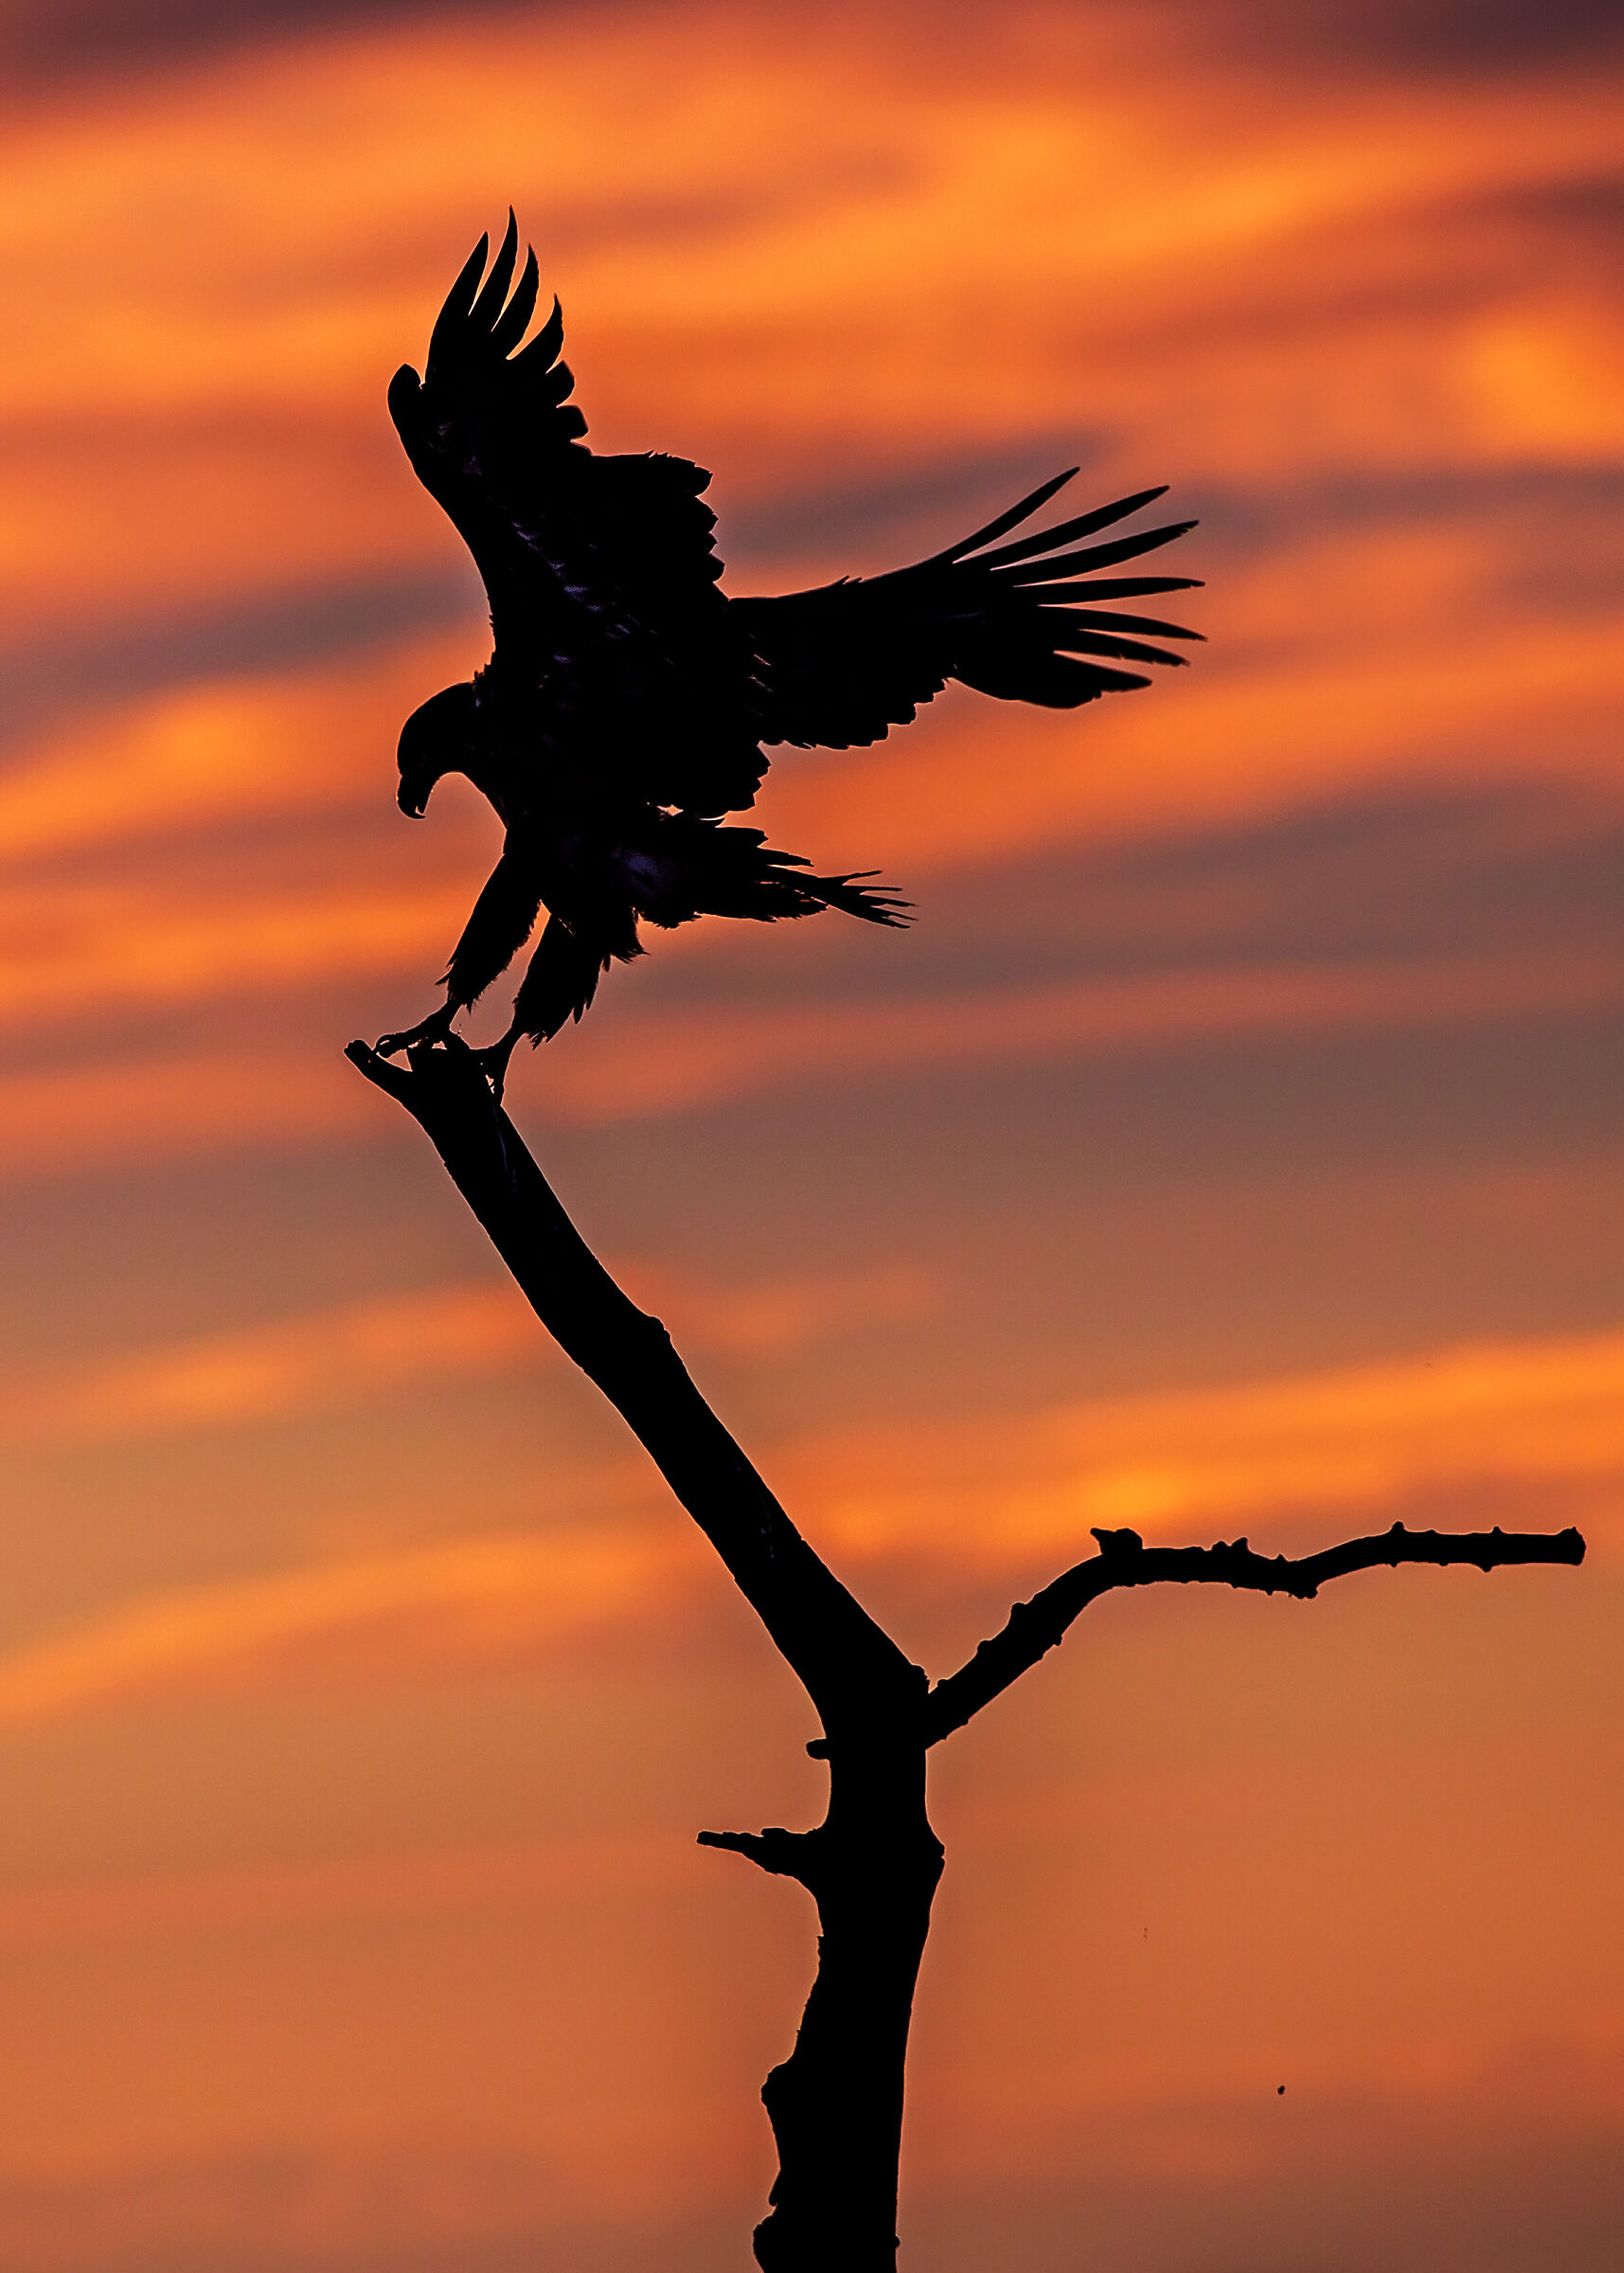 Eagle at sunset...